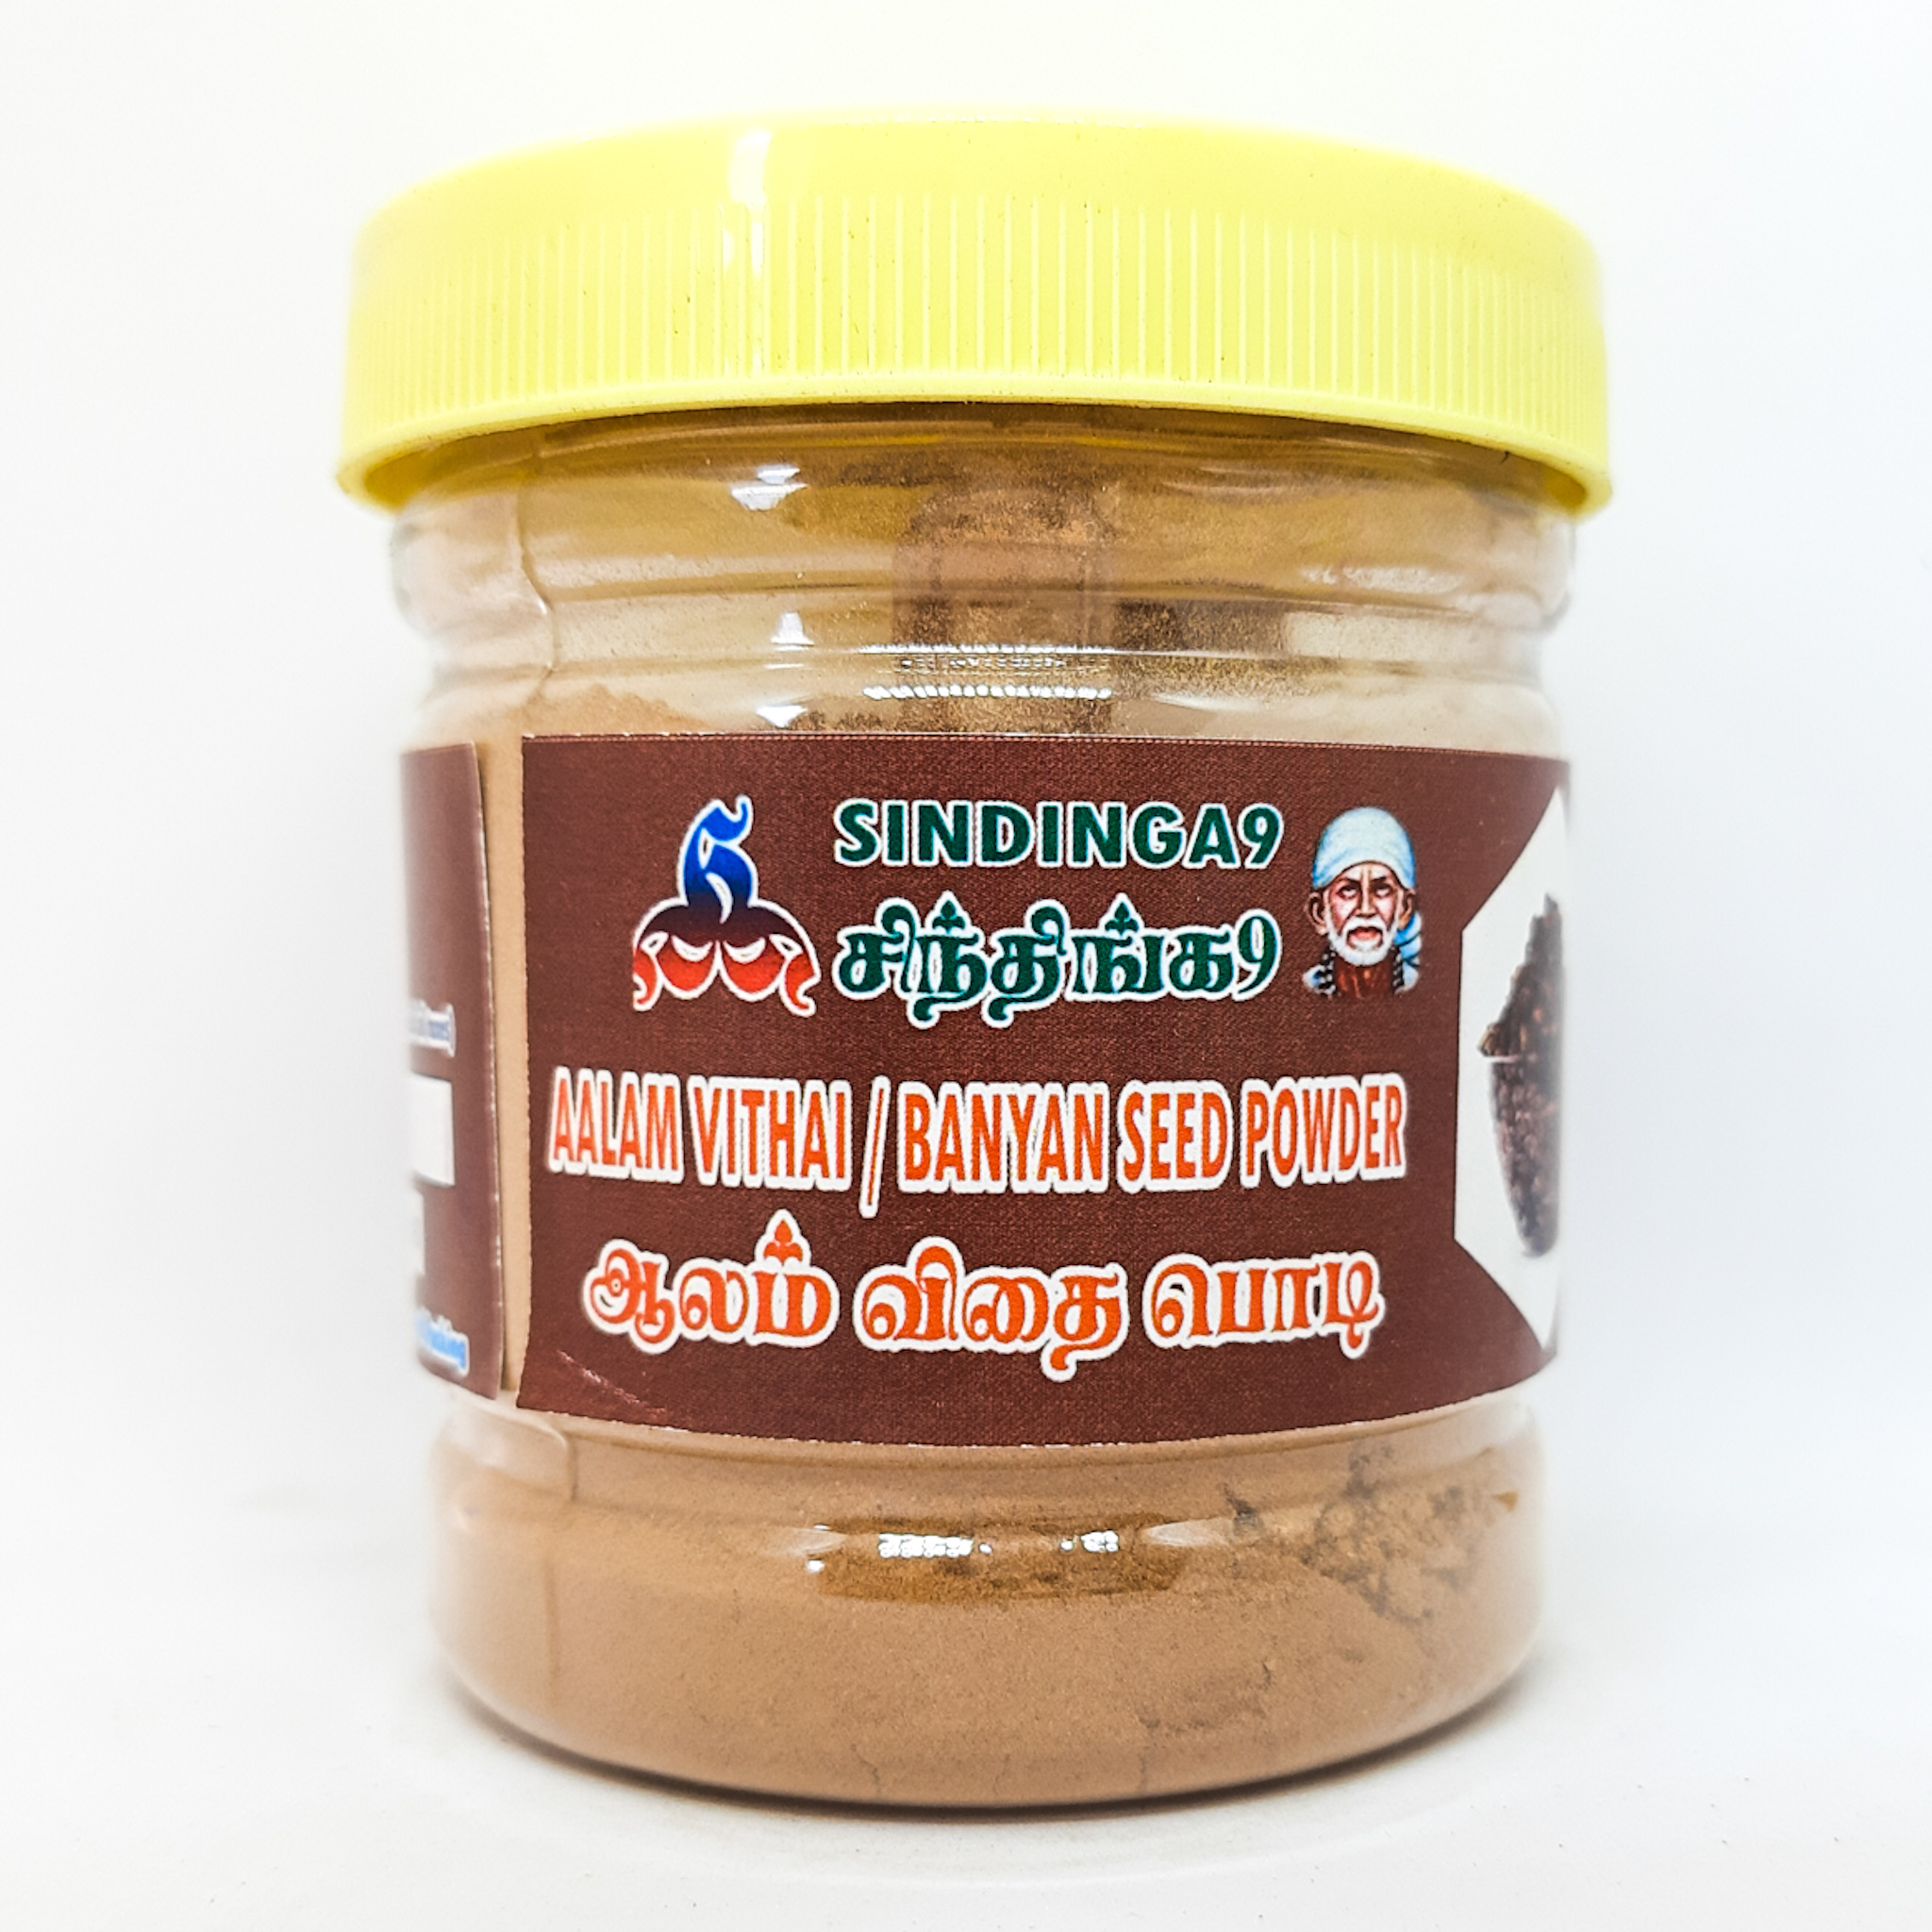 Aalam vithai / ஆழம் விதை/ Banyan seed powder 100g